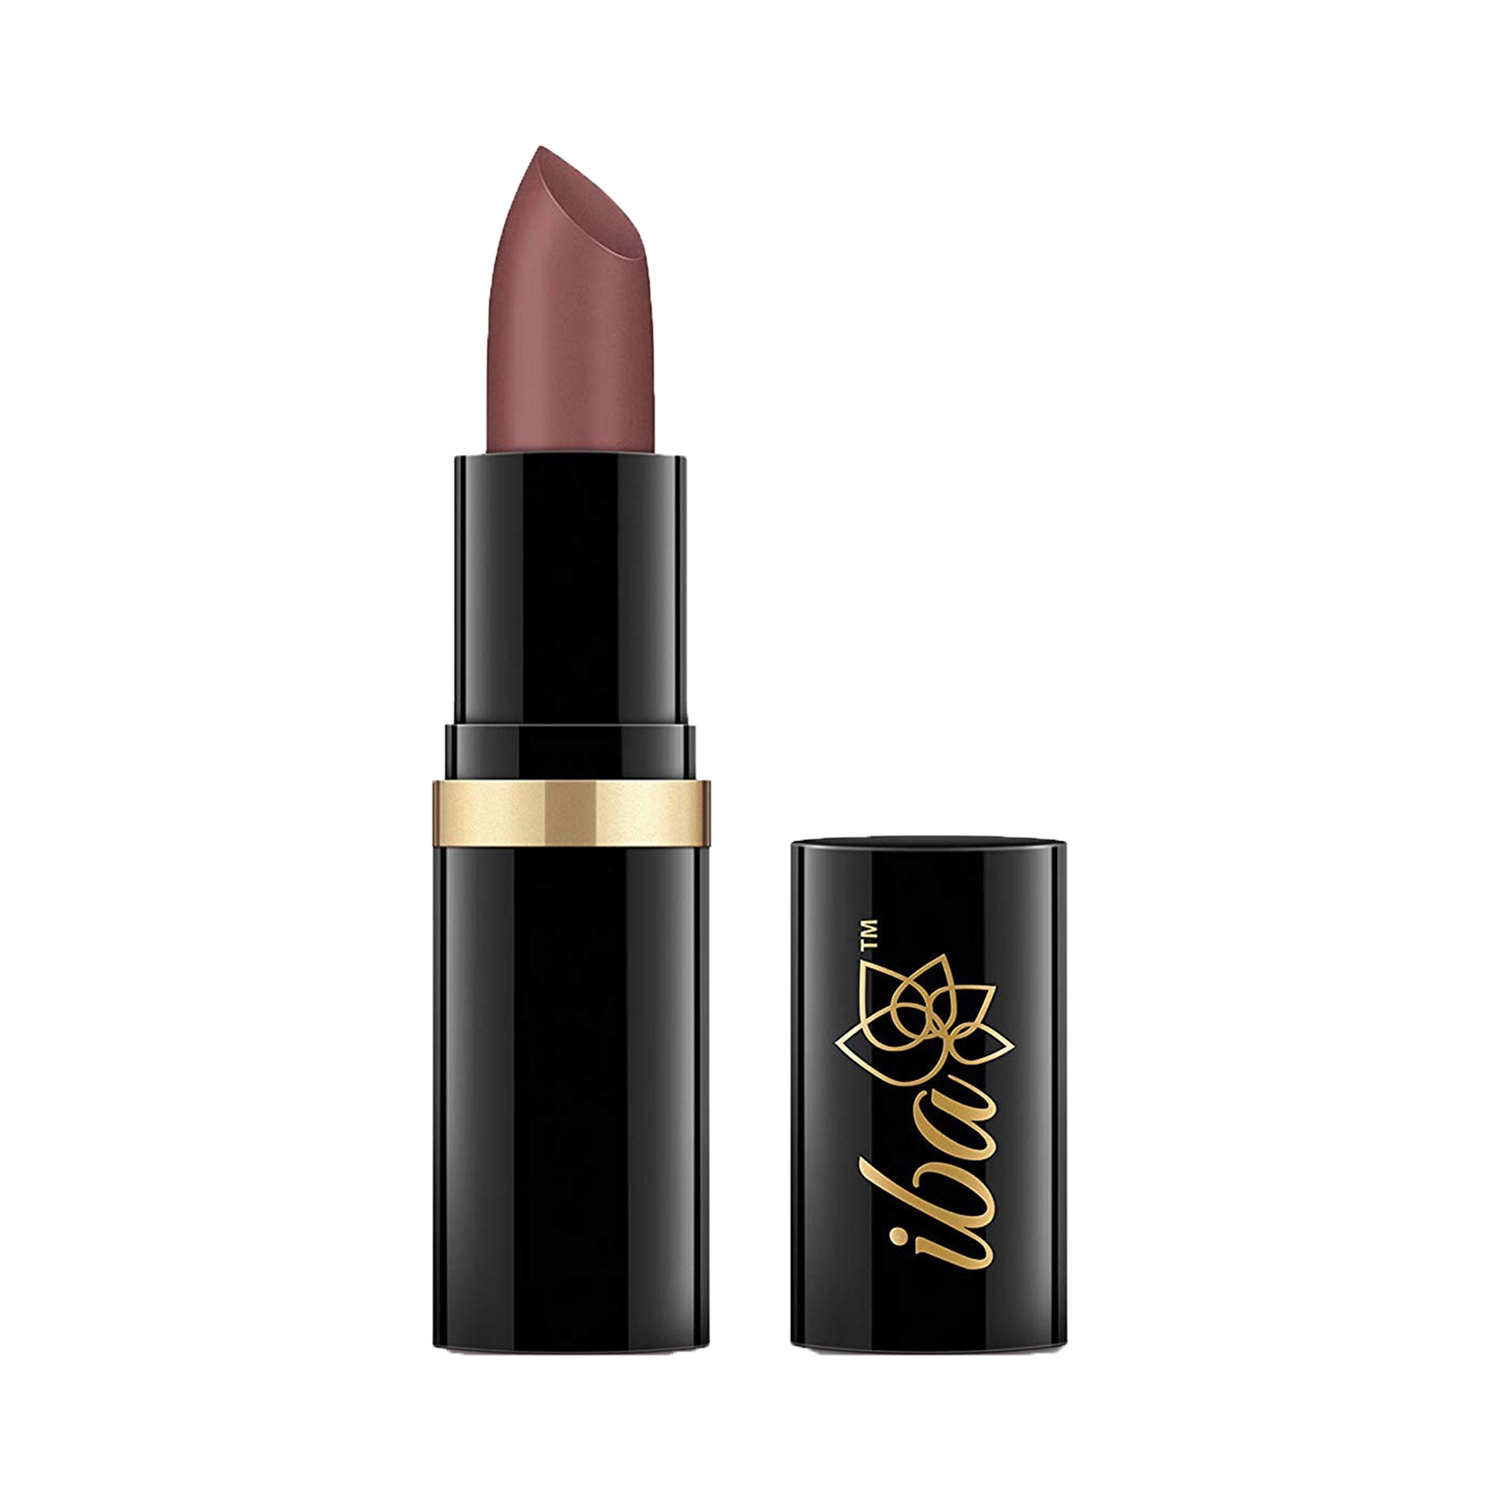 Iba Pure Lips Moisture Rich Lipstick - A95 Mauve Touch (4g)